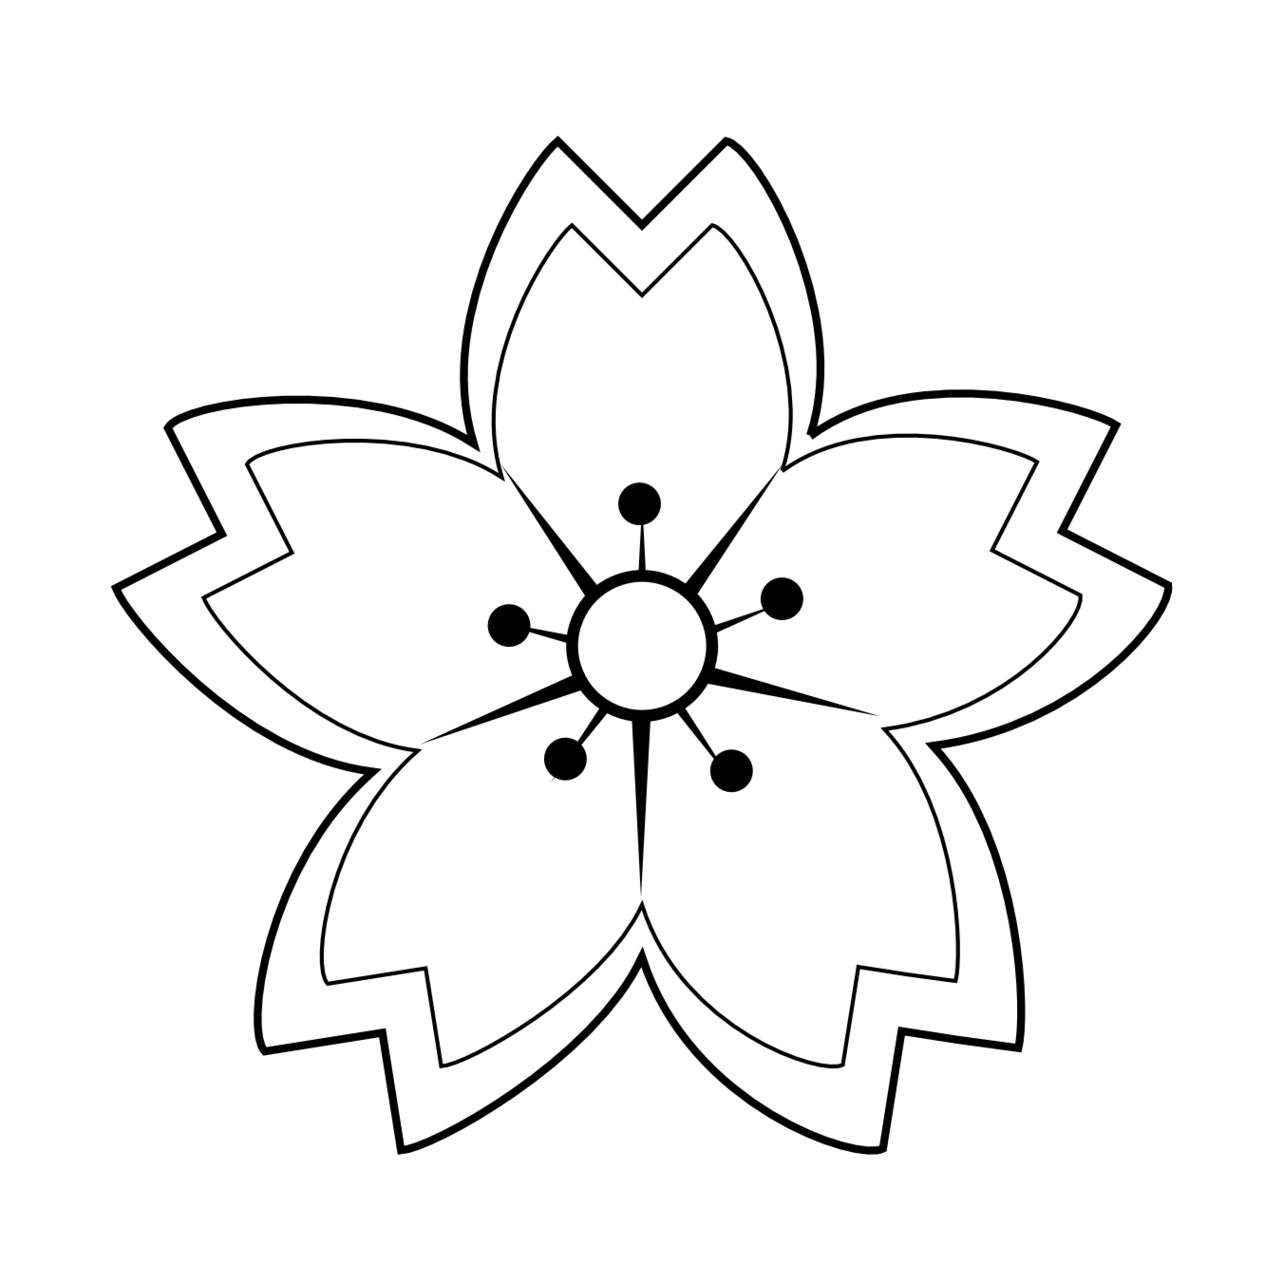 Plant Flower Sakura 1 Black White Line Art Tattoo Clipart - Free ...